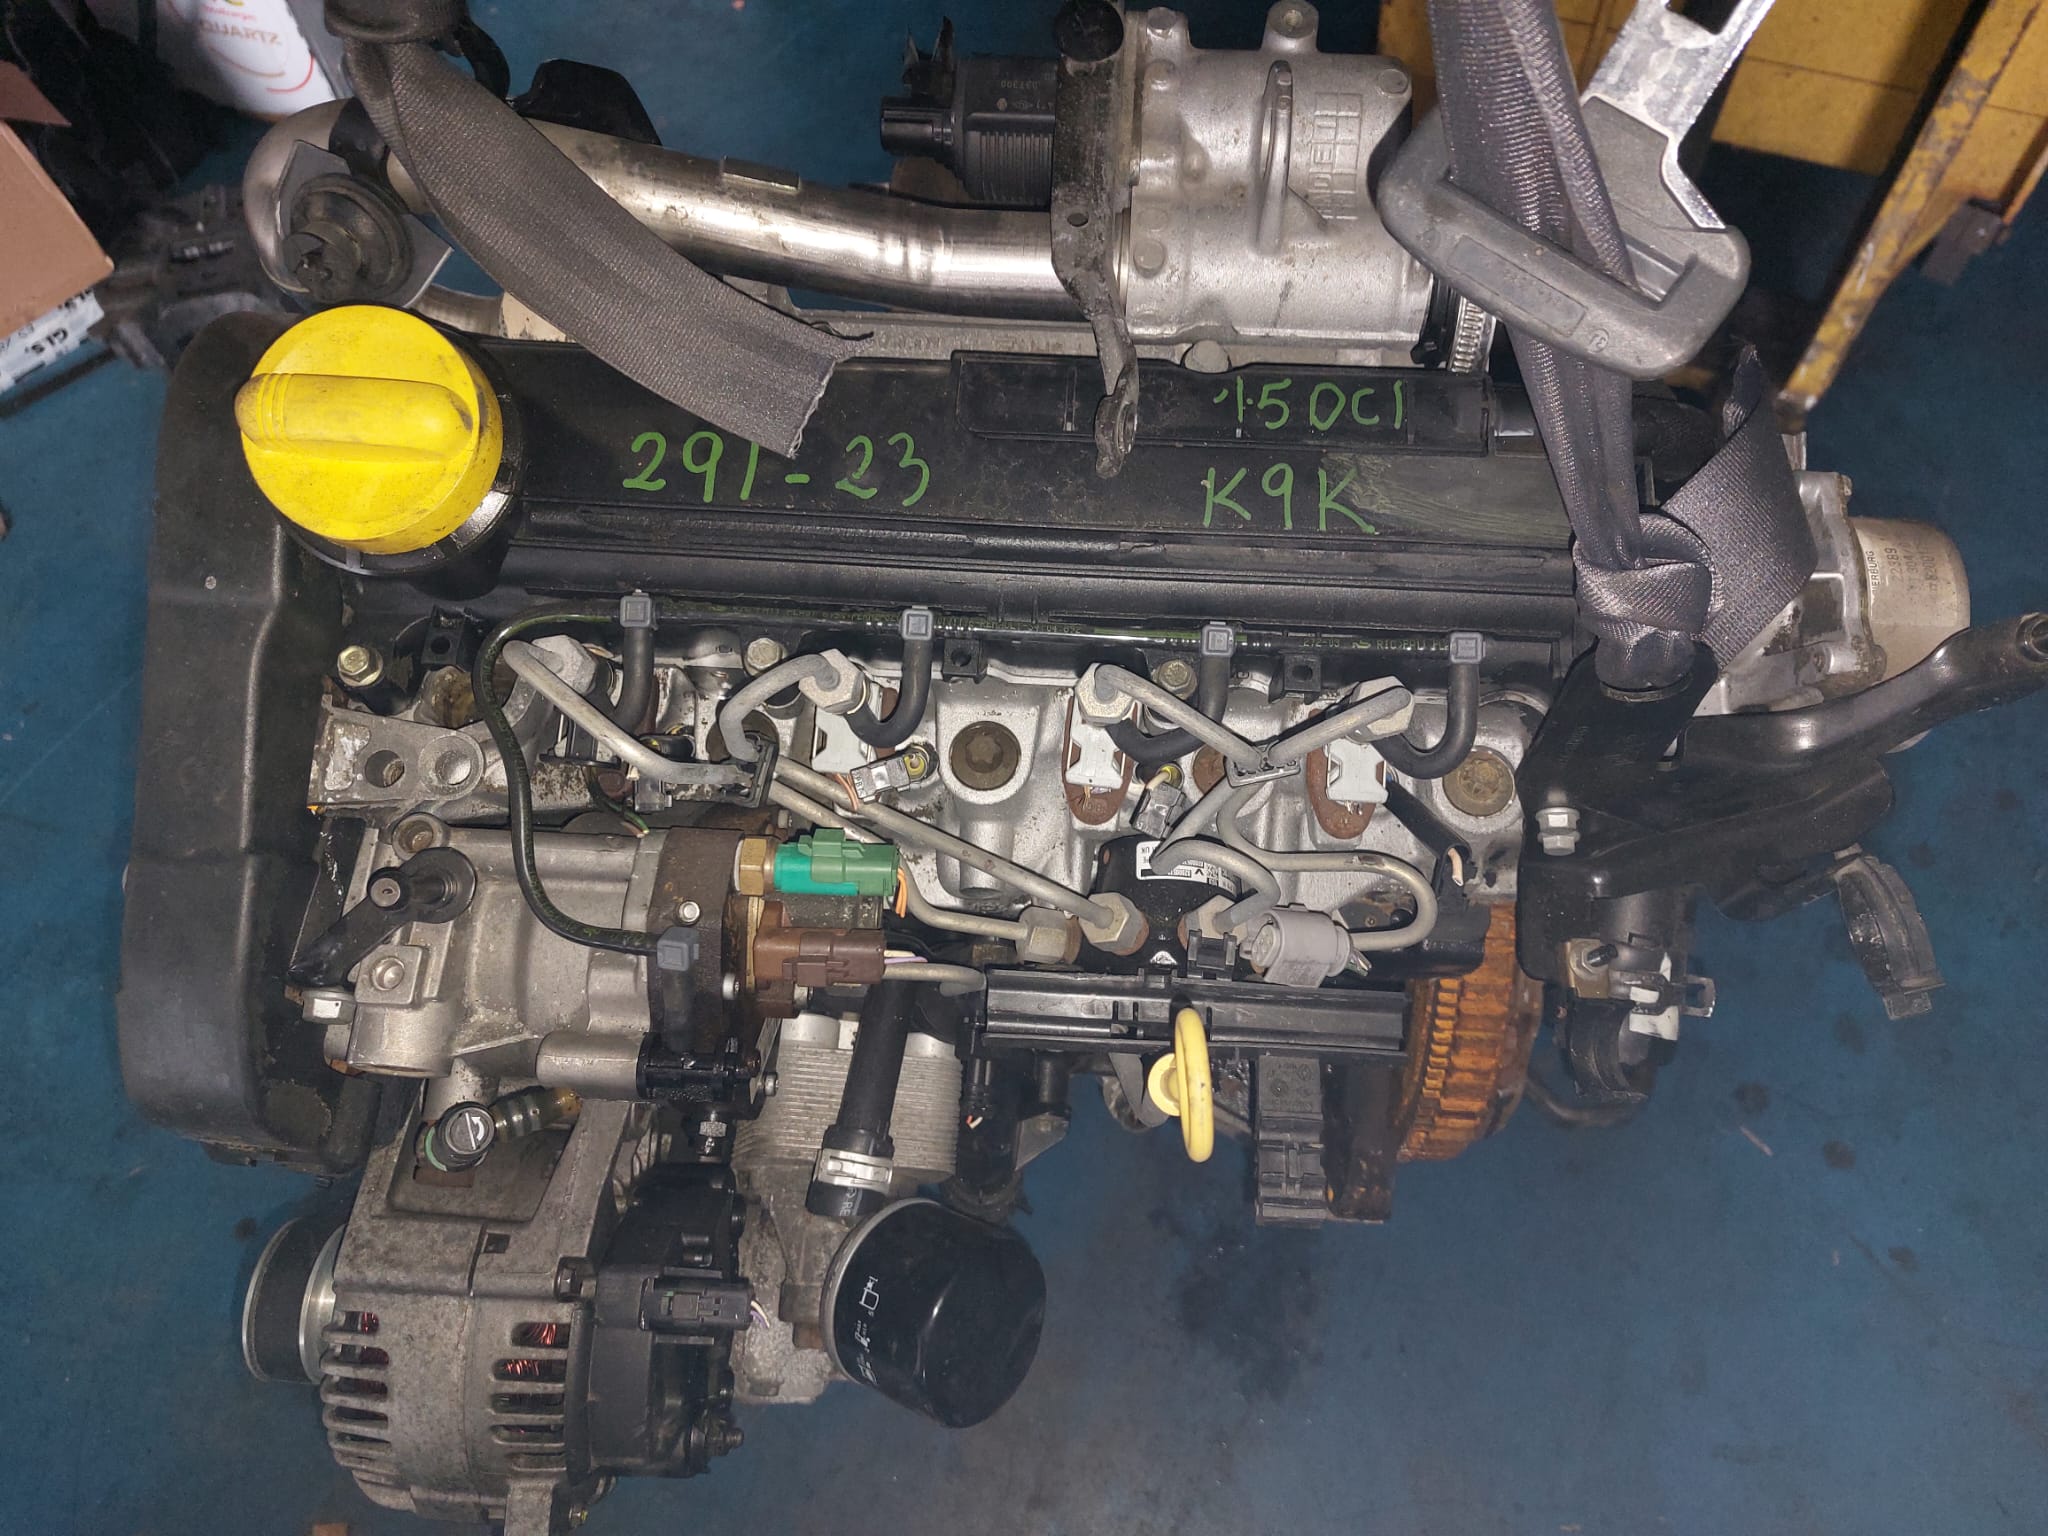 K9kf728 motor 1500 DCI Renault scenic II